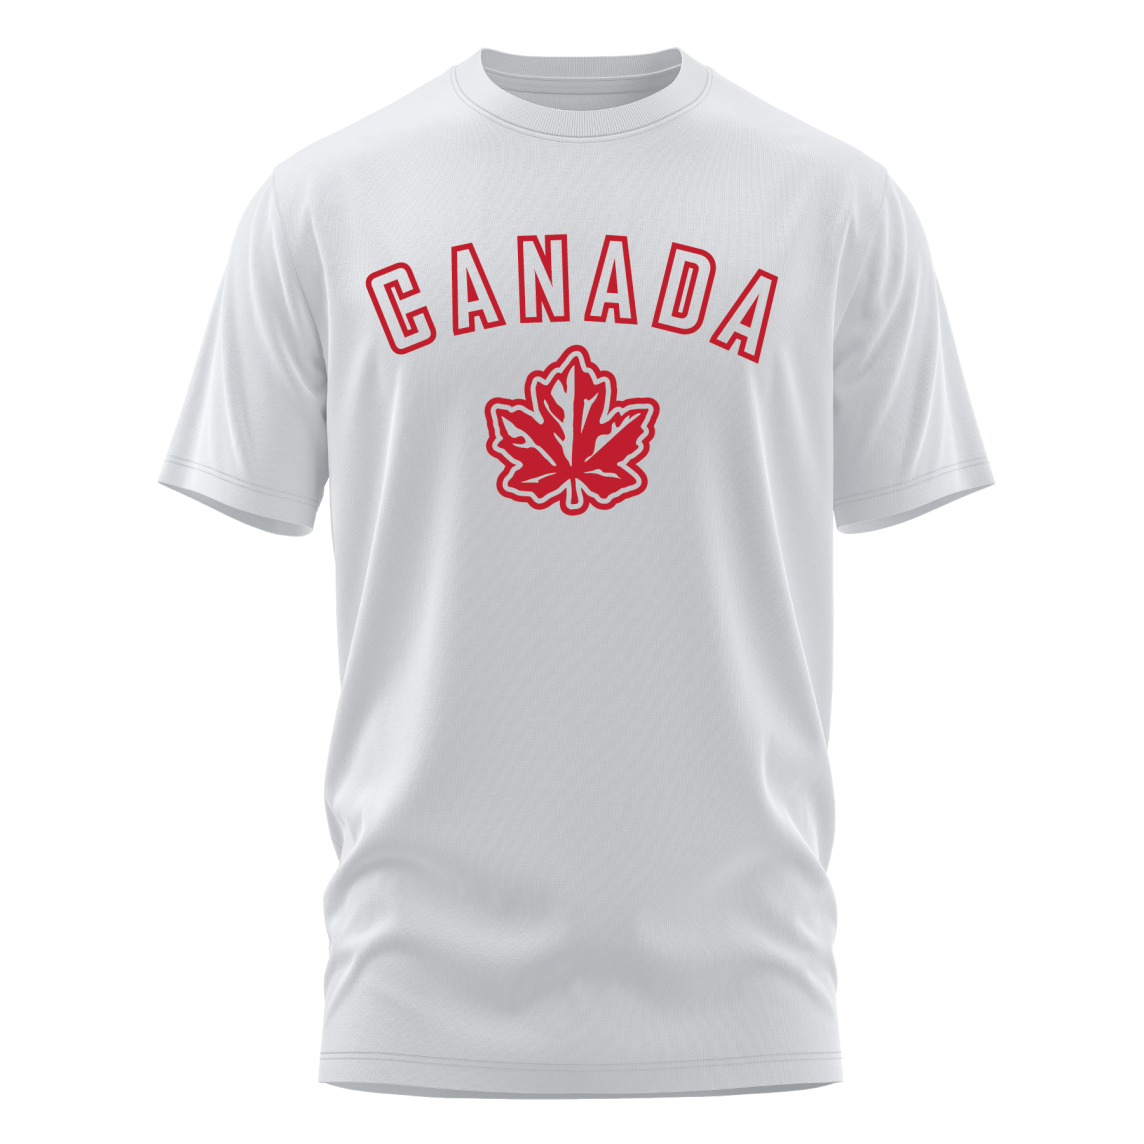 OCG Canada Maple Leaf silk screened on white Tee Shirt